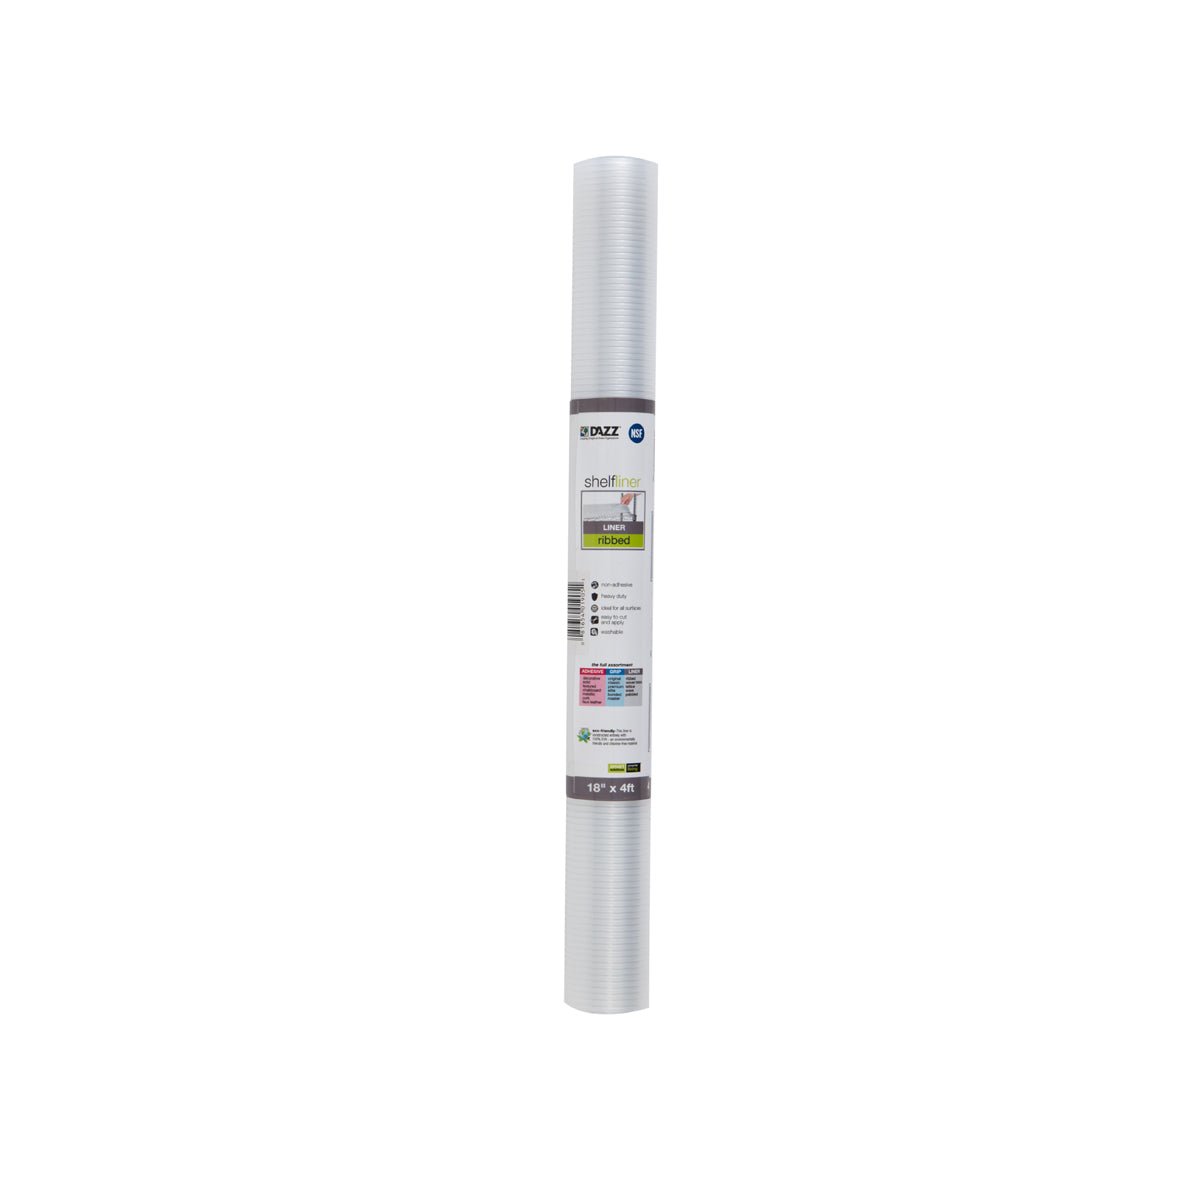 Wire Rack Shelf Liner - 18 Inch x 4 Feet - NSF Certified - Smart Design® 6